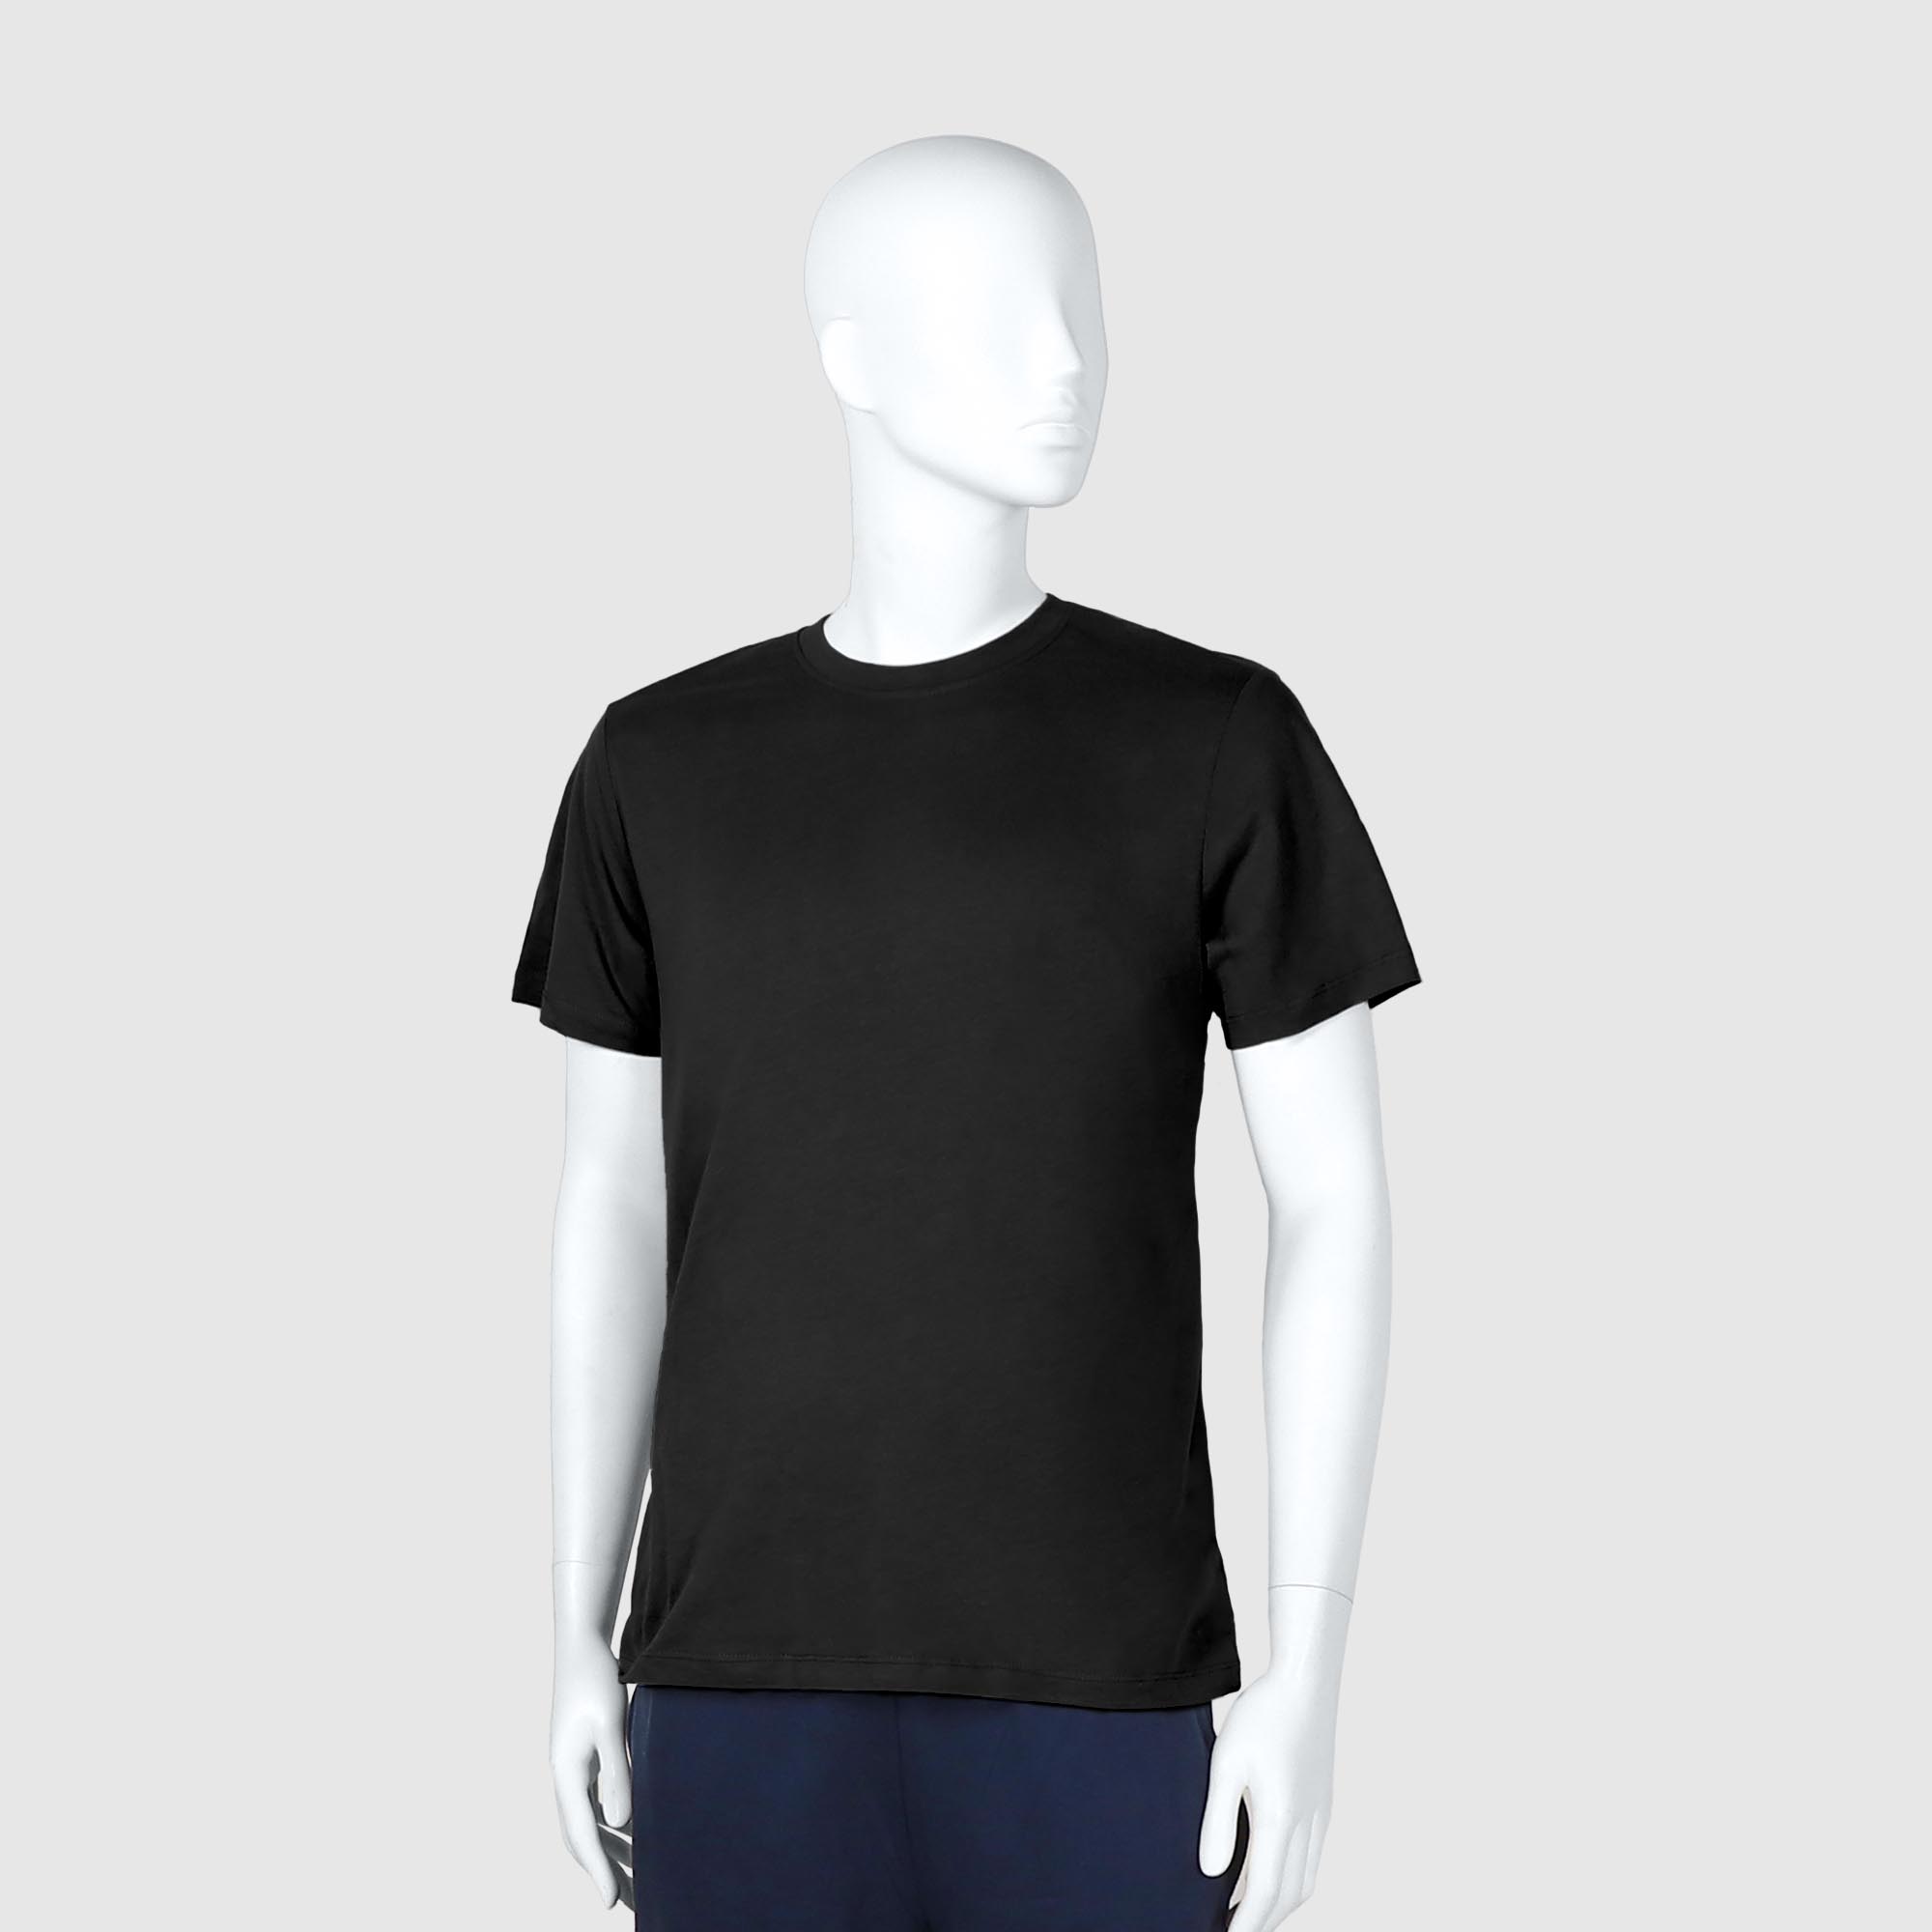 Мужская футболка Diva Teks чёрная (DTD-01), цвет чёрный, размер 44-46 - фото 1